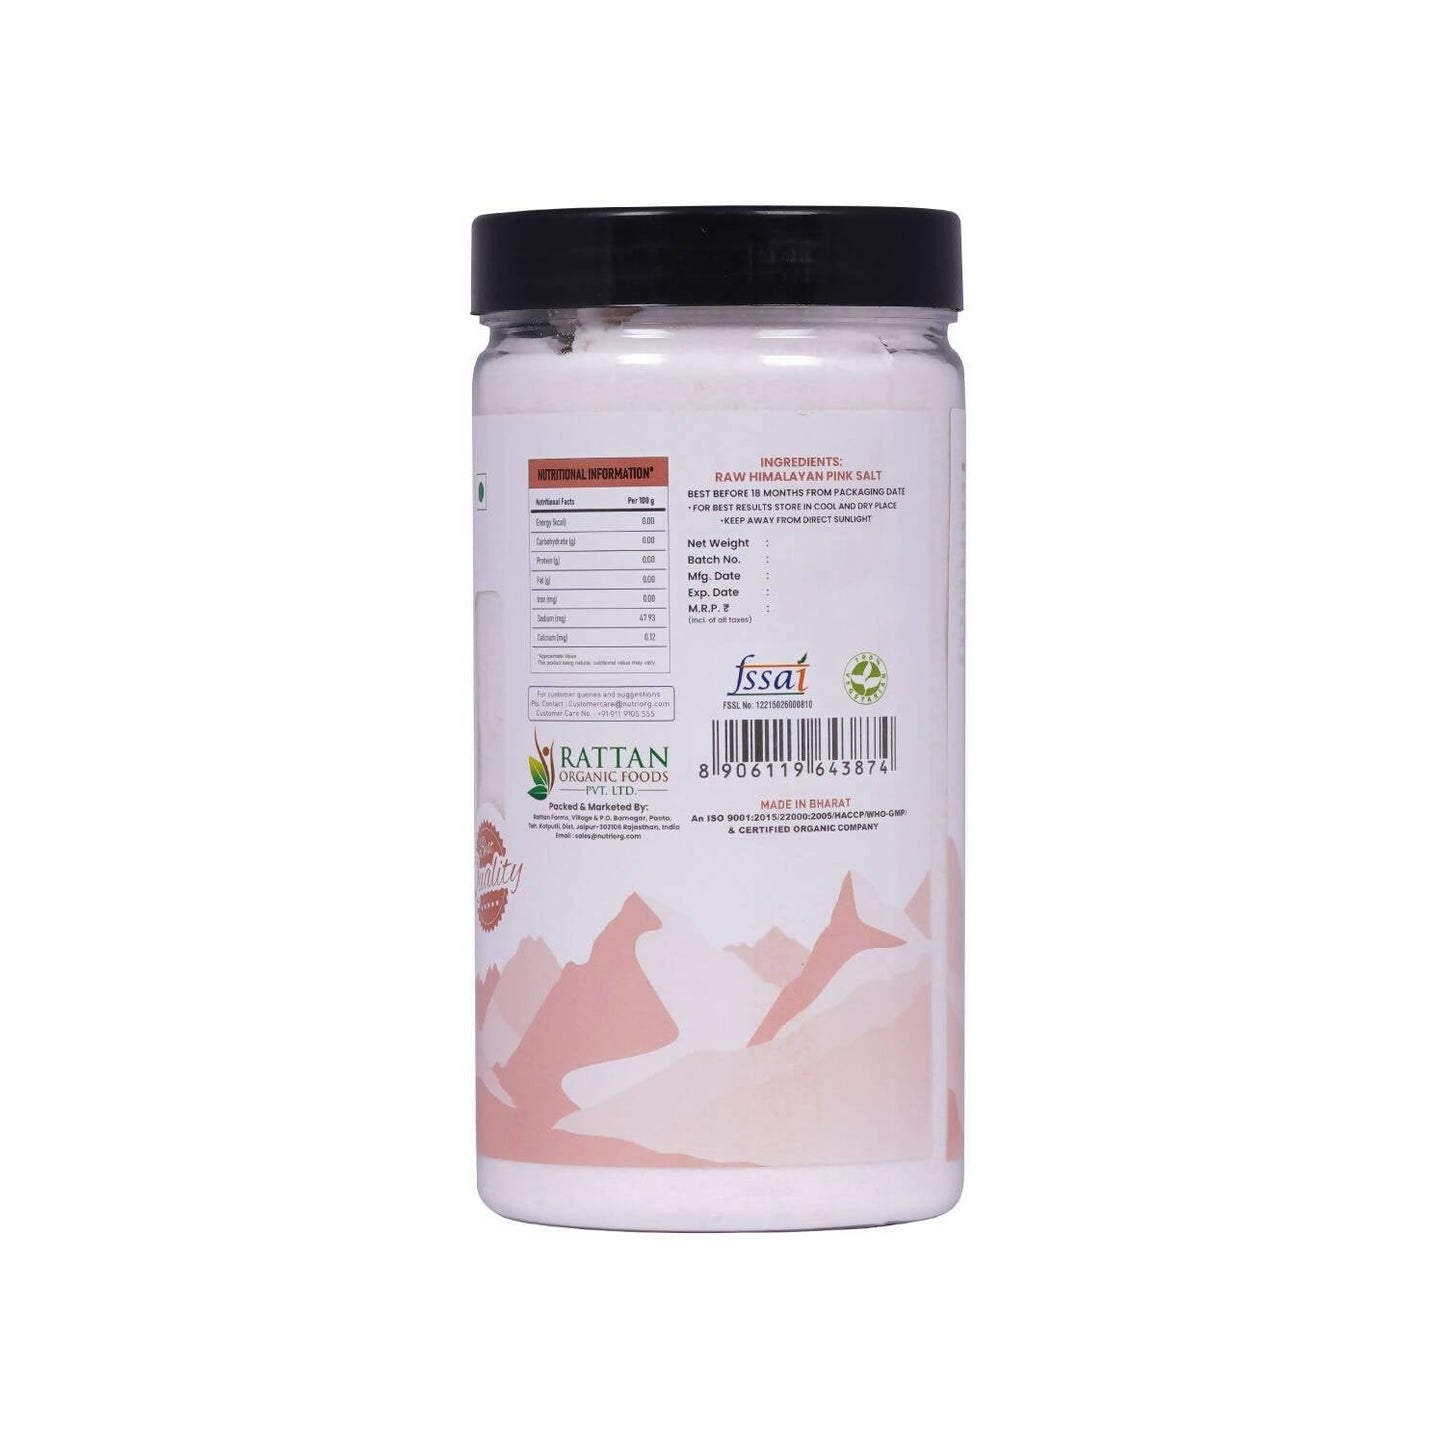 Nutriorg Pinksalt Powder